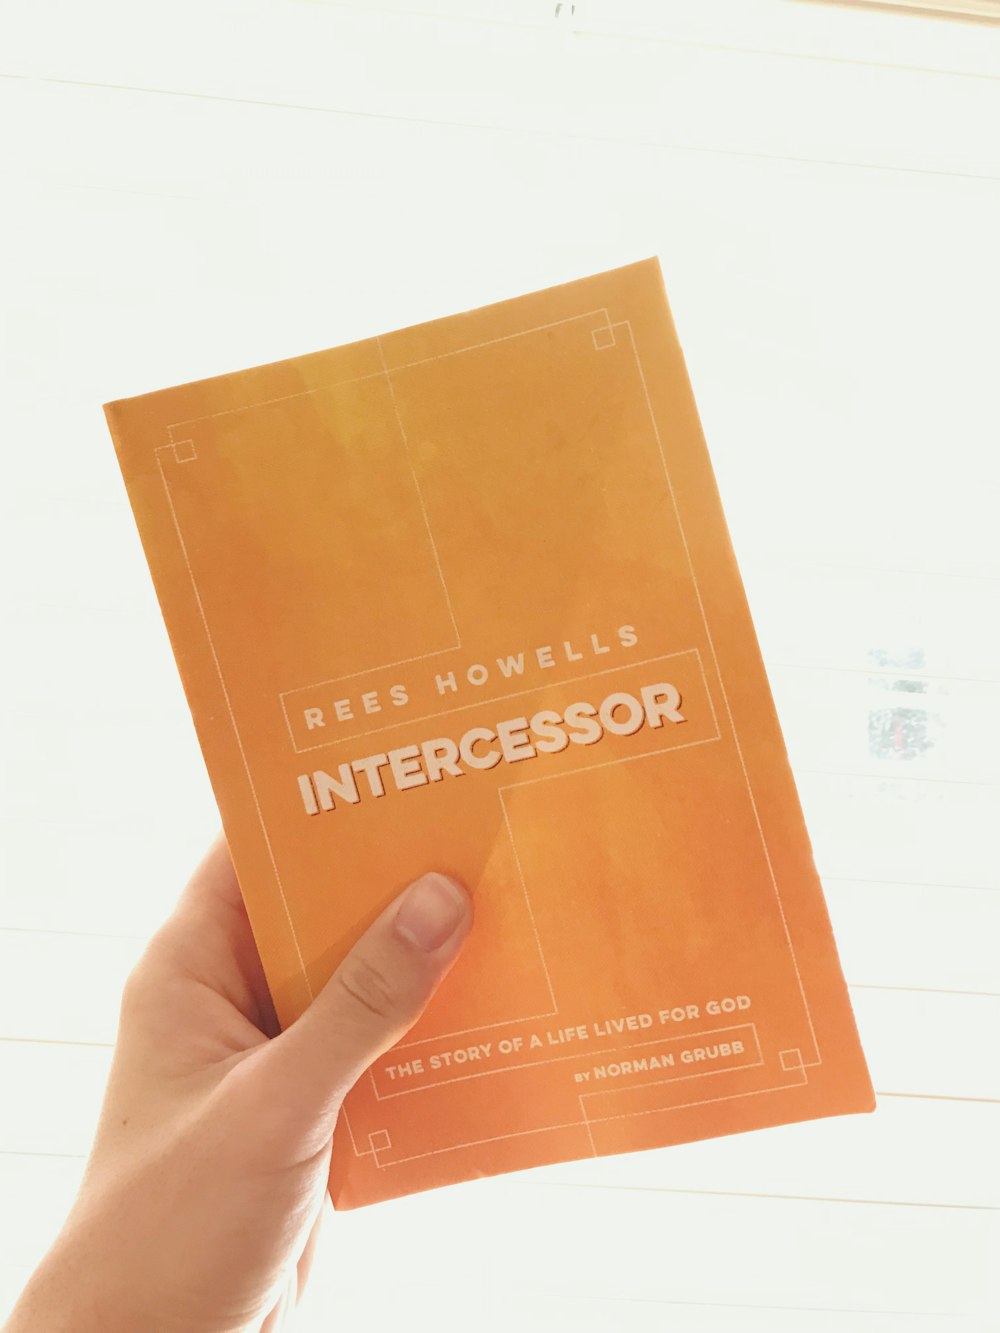 Intercessor by Rees Howells book